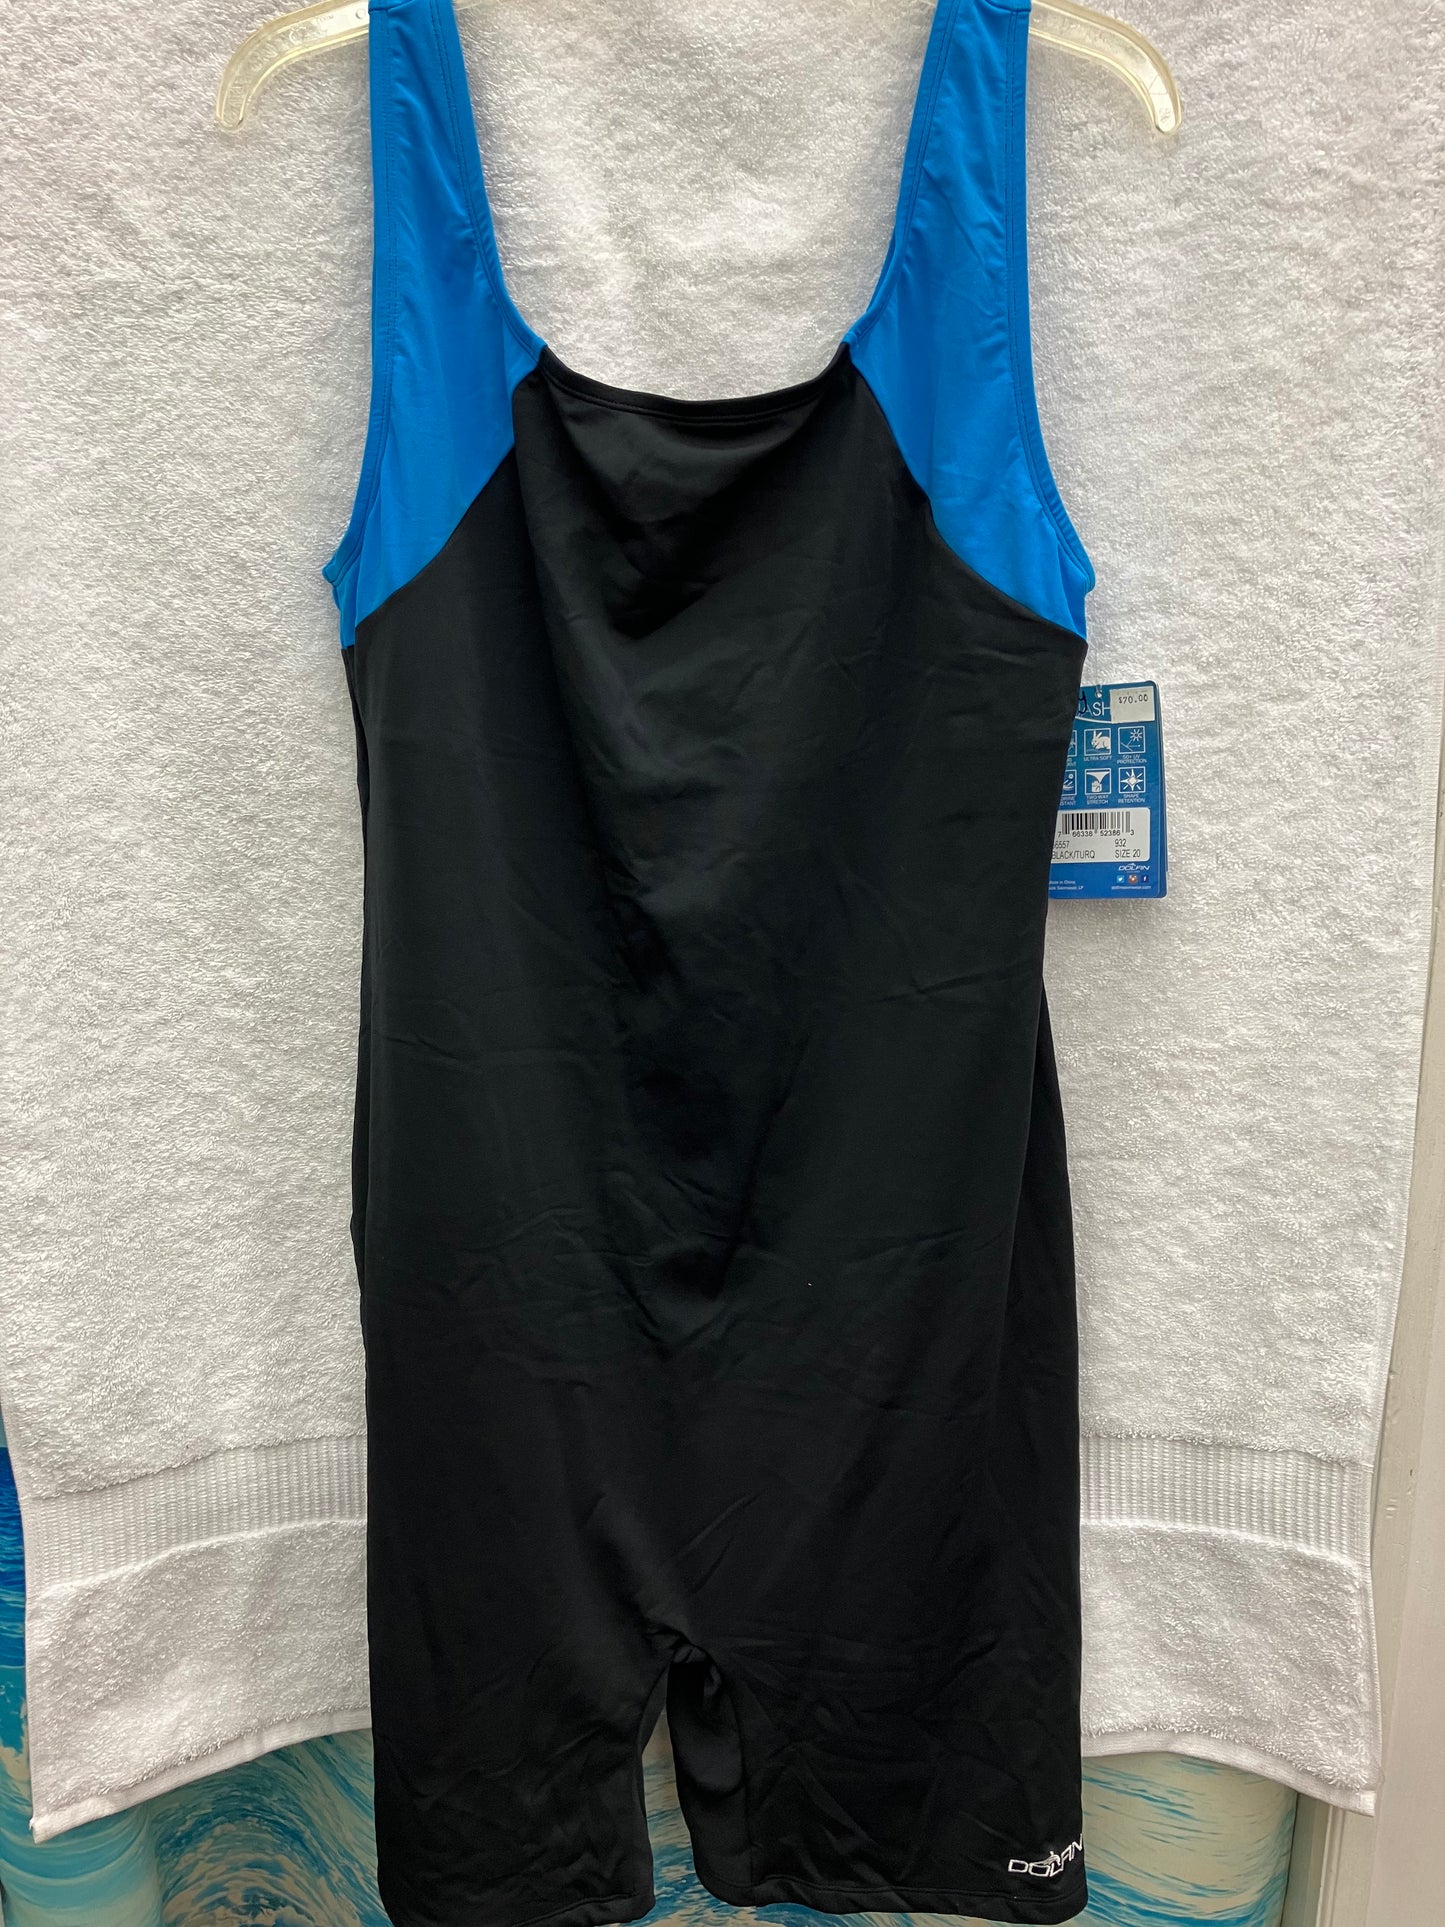 Dolfin Black/Turquoise Instructor Suit Size 20